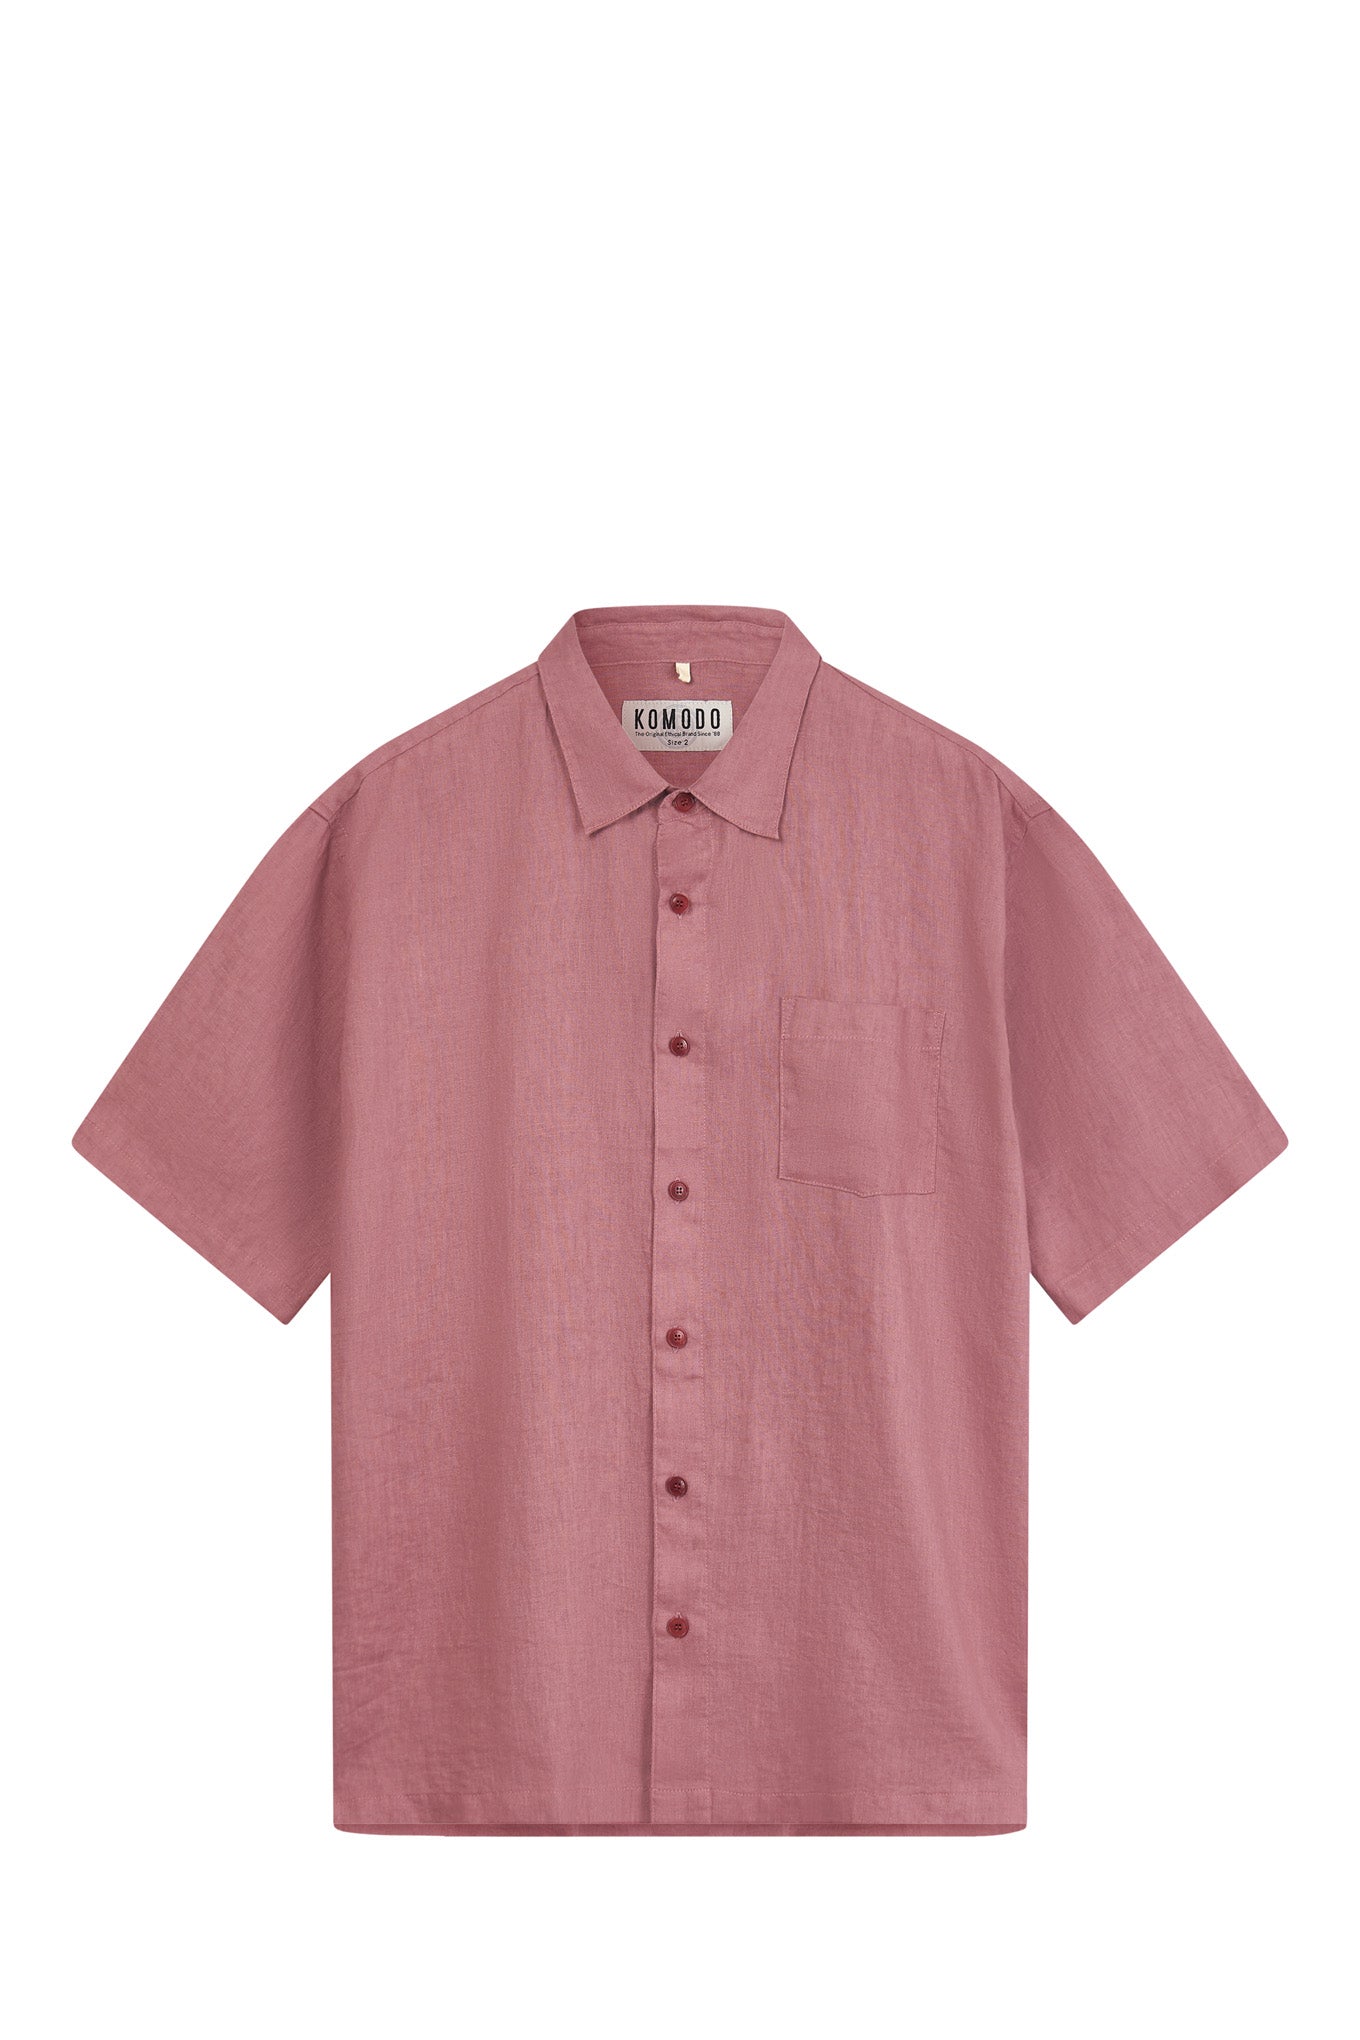 Pink, short-sleeved shirt SEB made from organic linen by Komodo